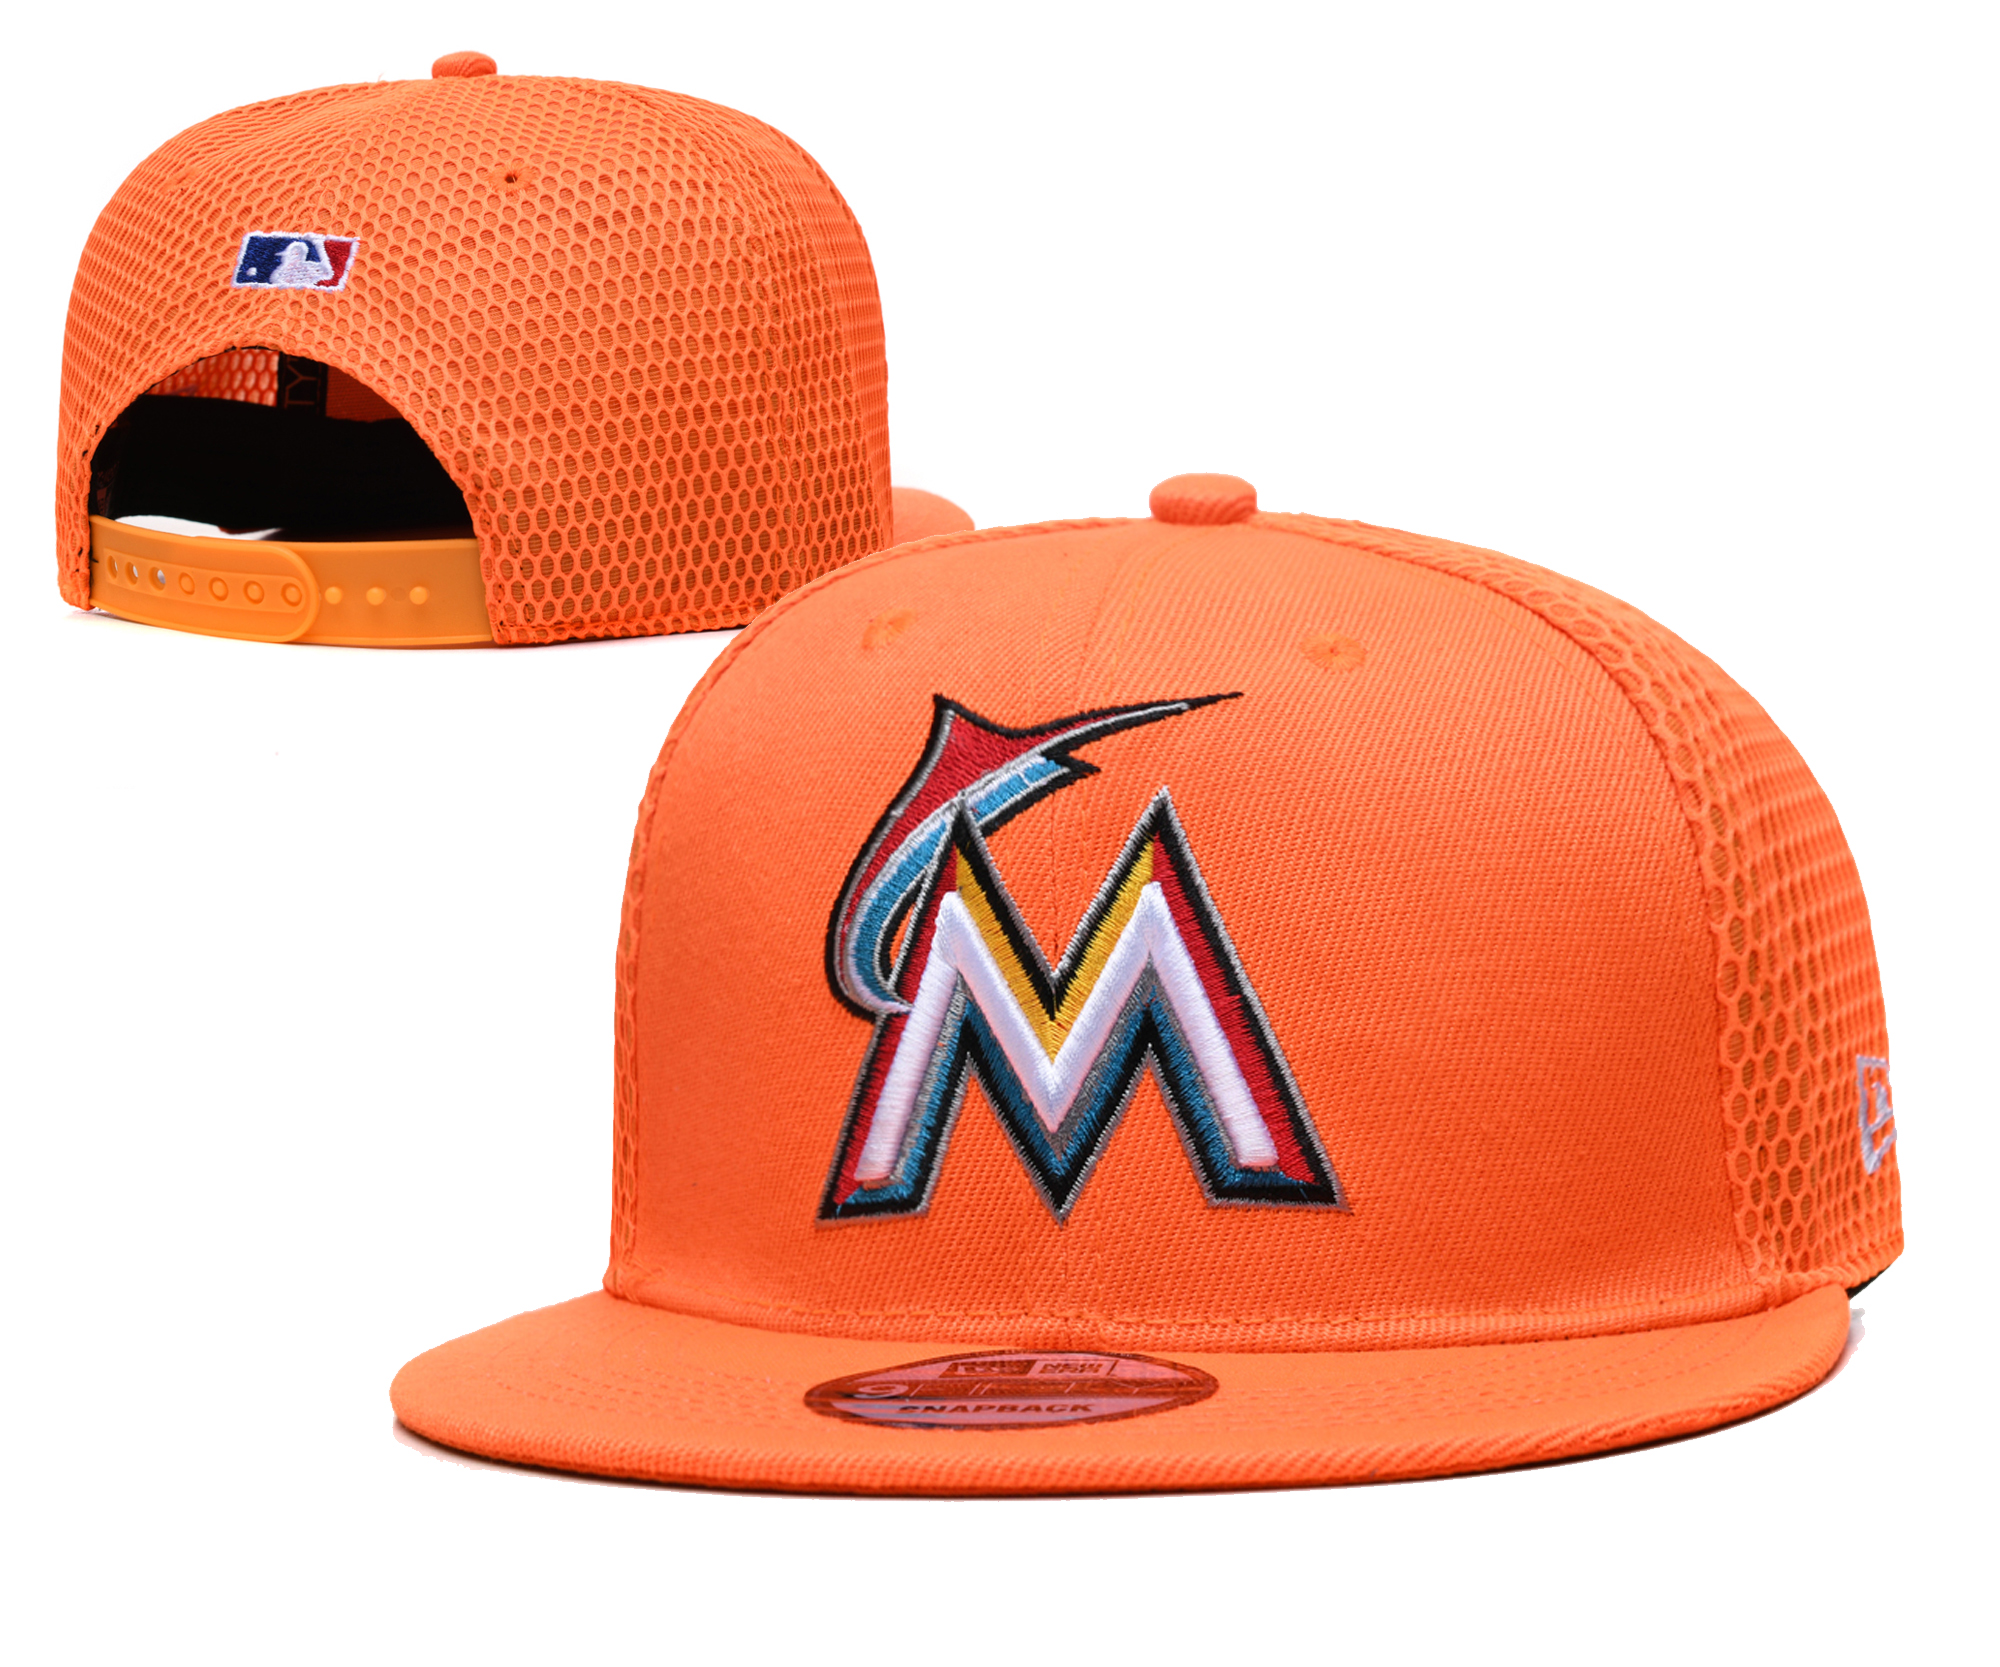 2021 MLB Miami Marlins #12 TX hat